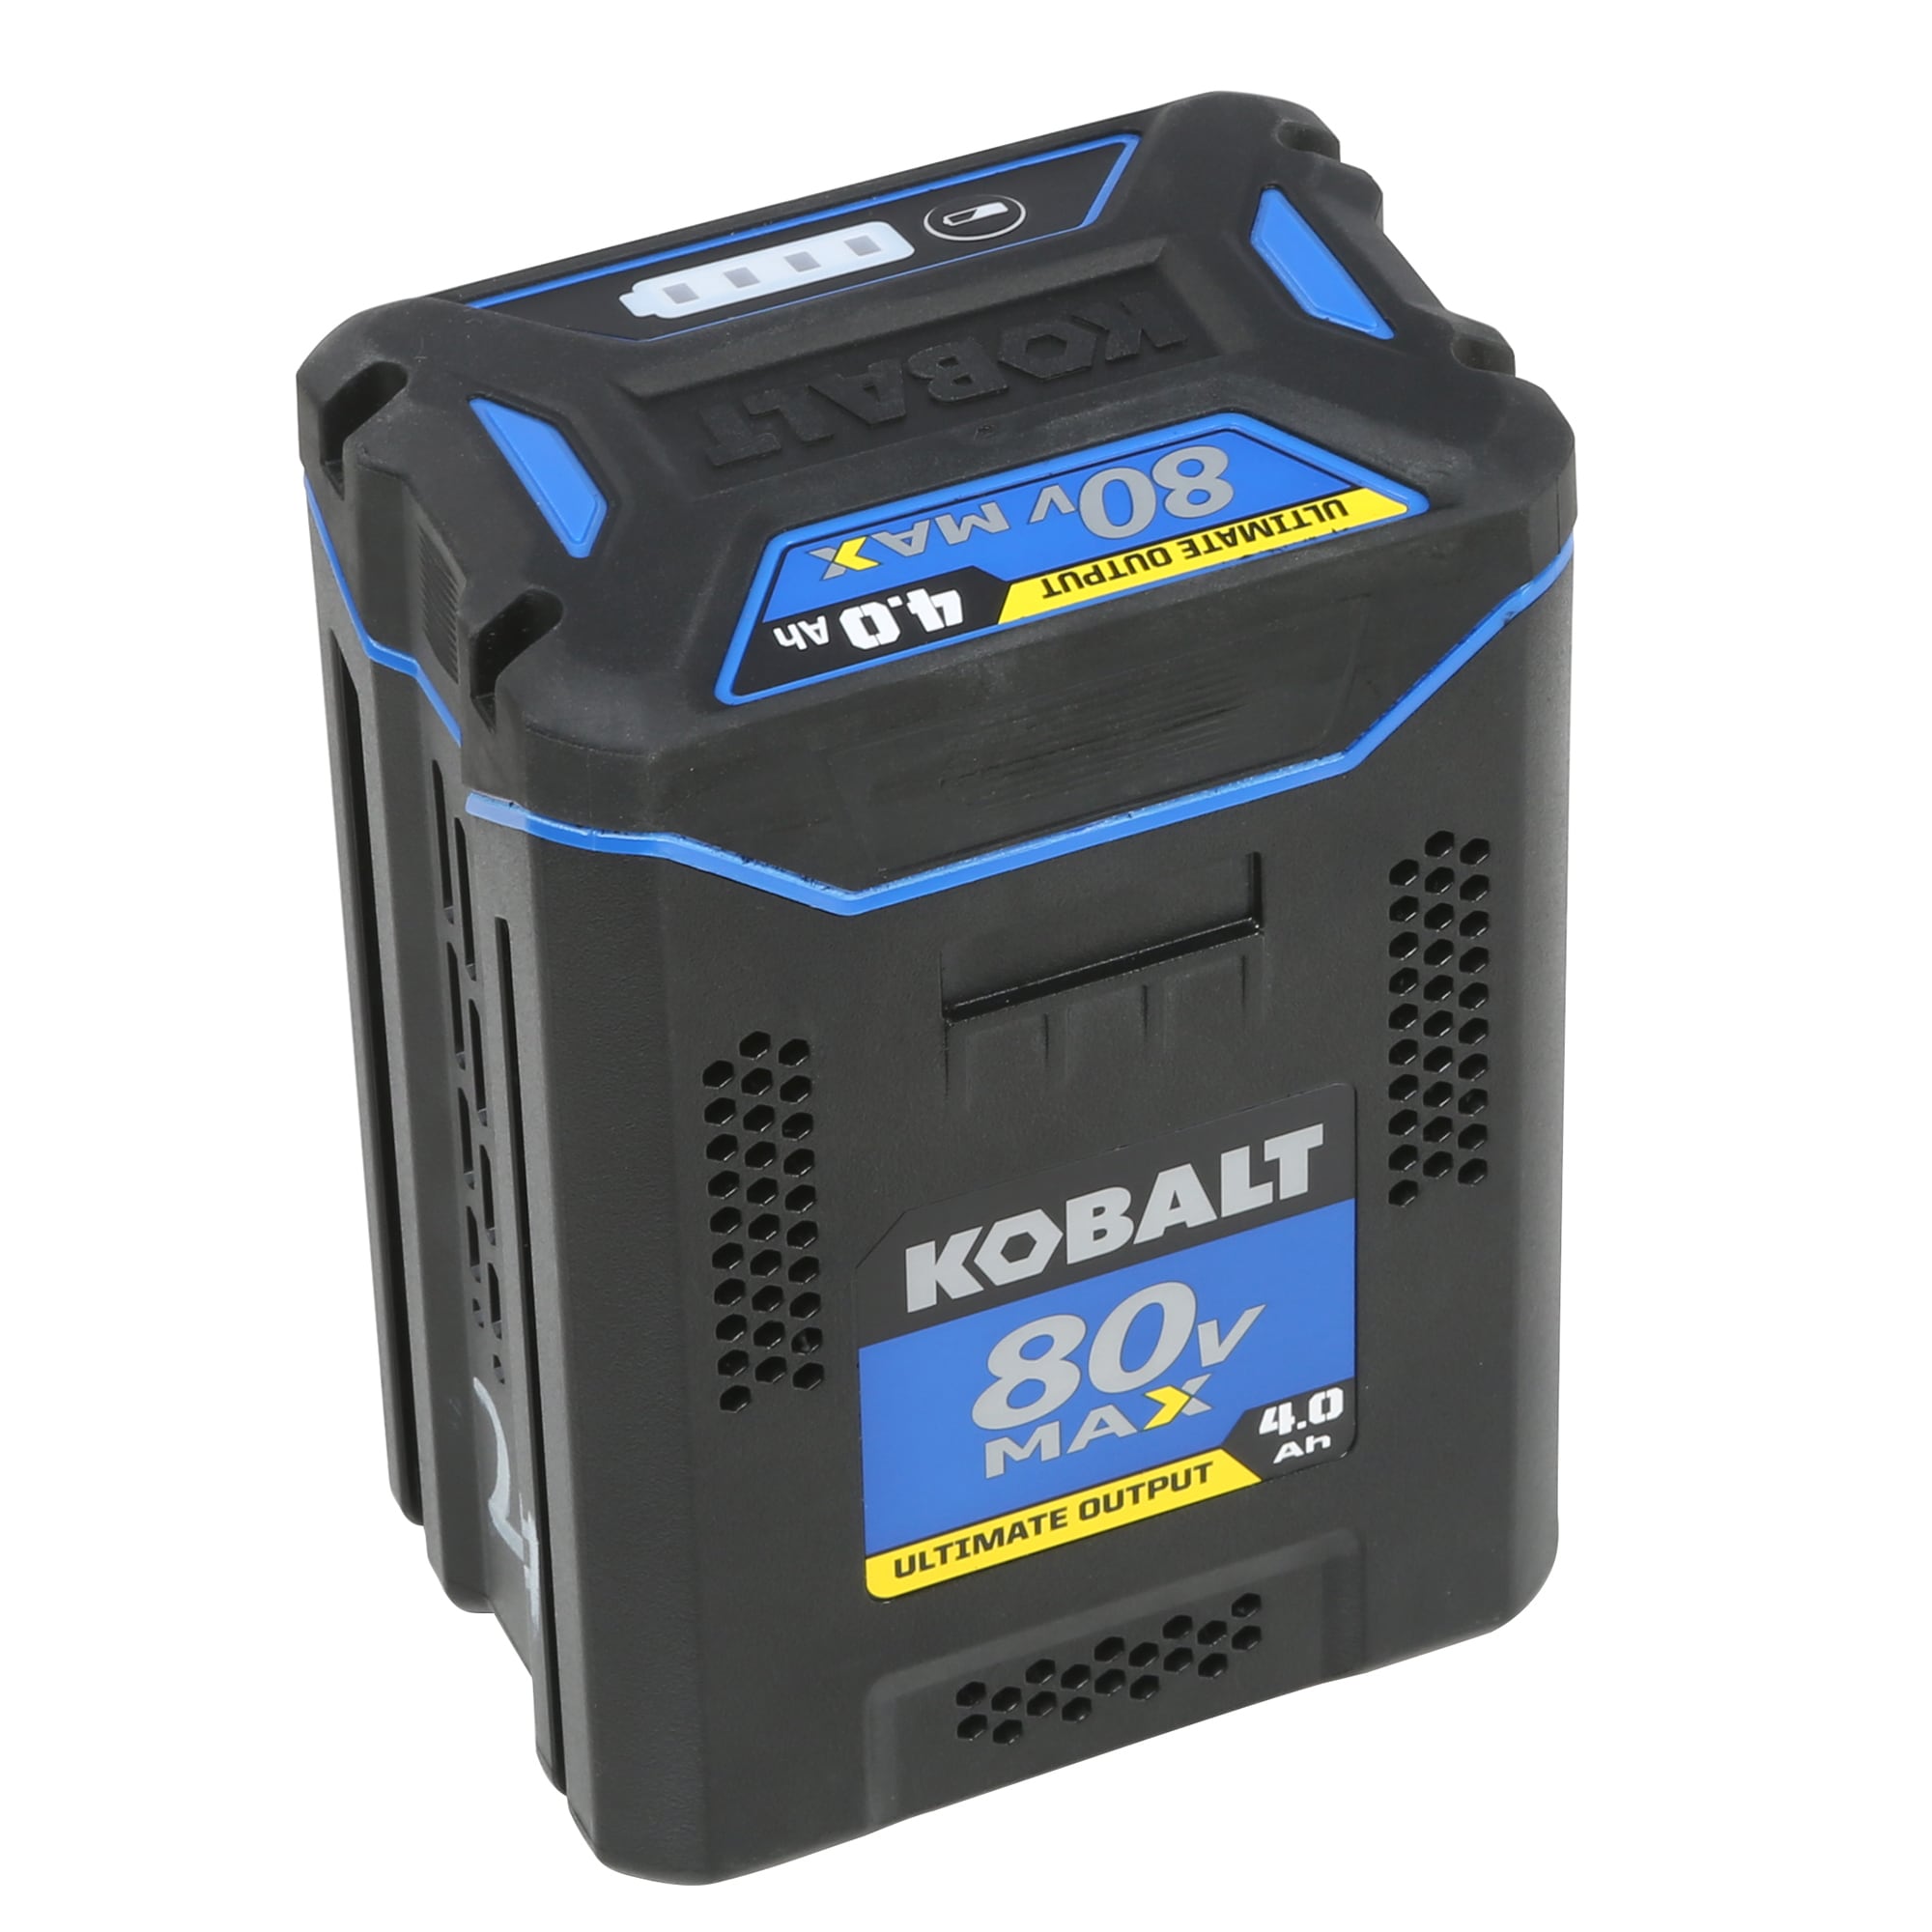 Kobalt 80-Volt 4 Ah Lithium Ion (li-ion) Battery